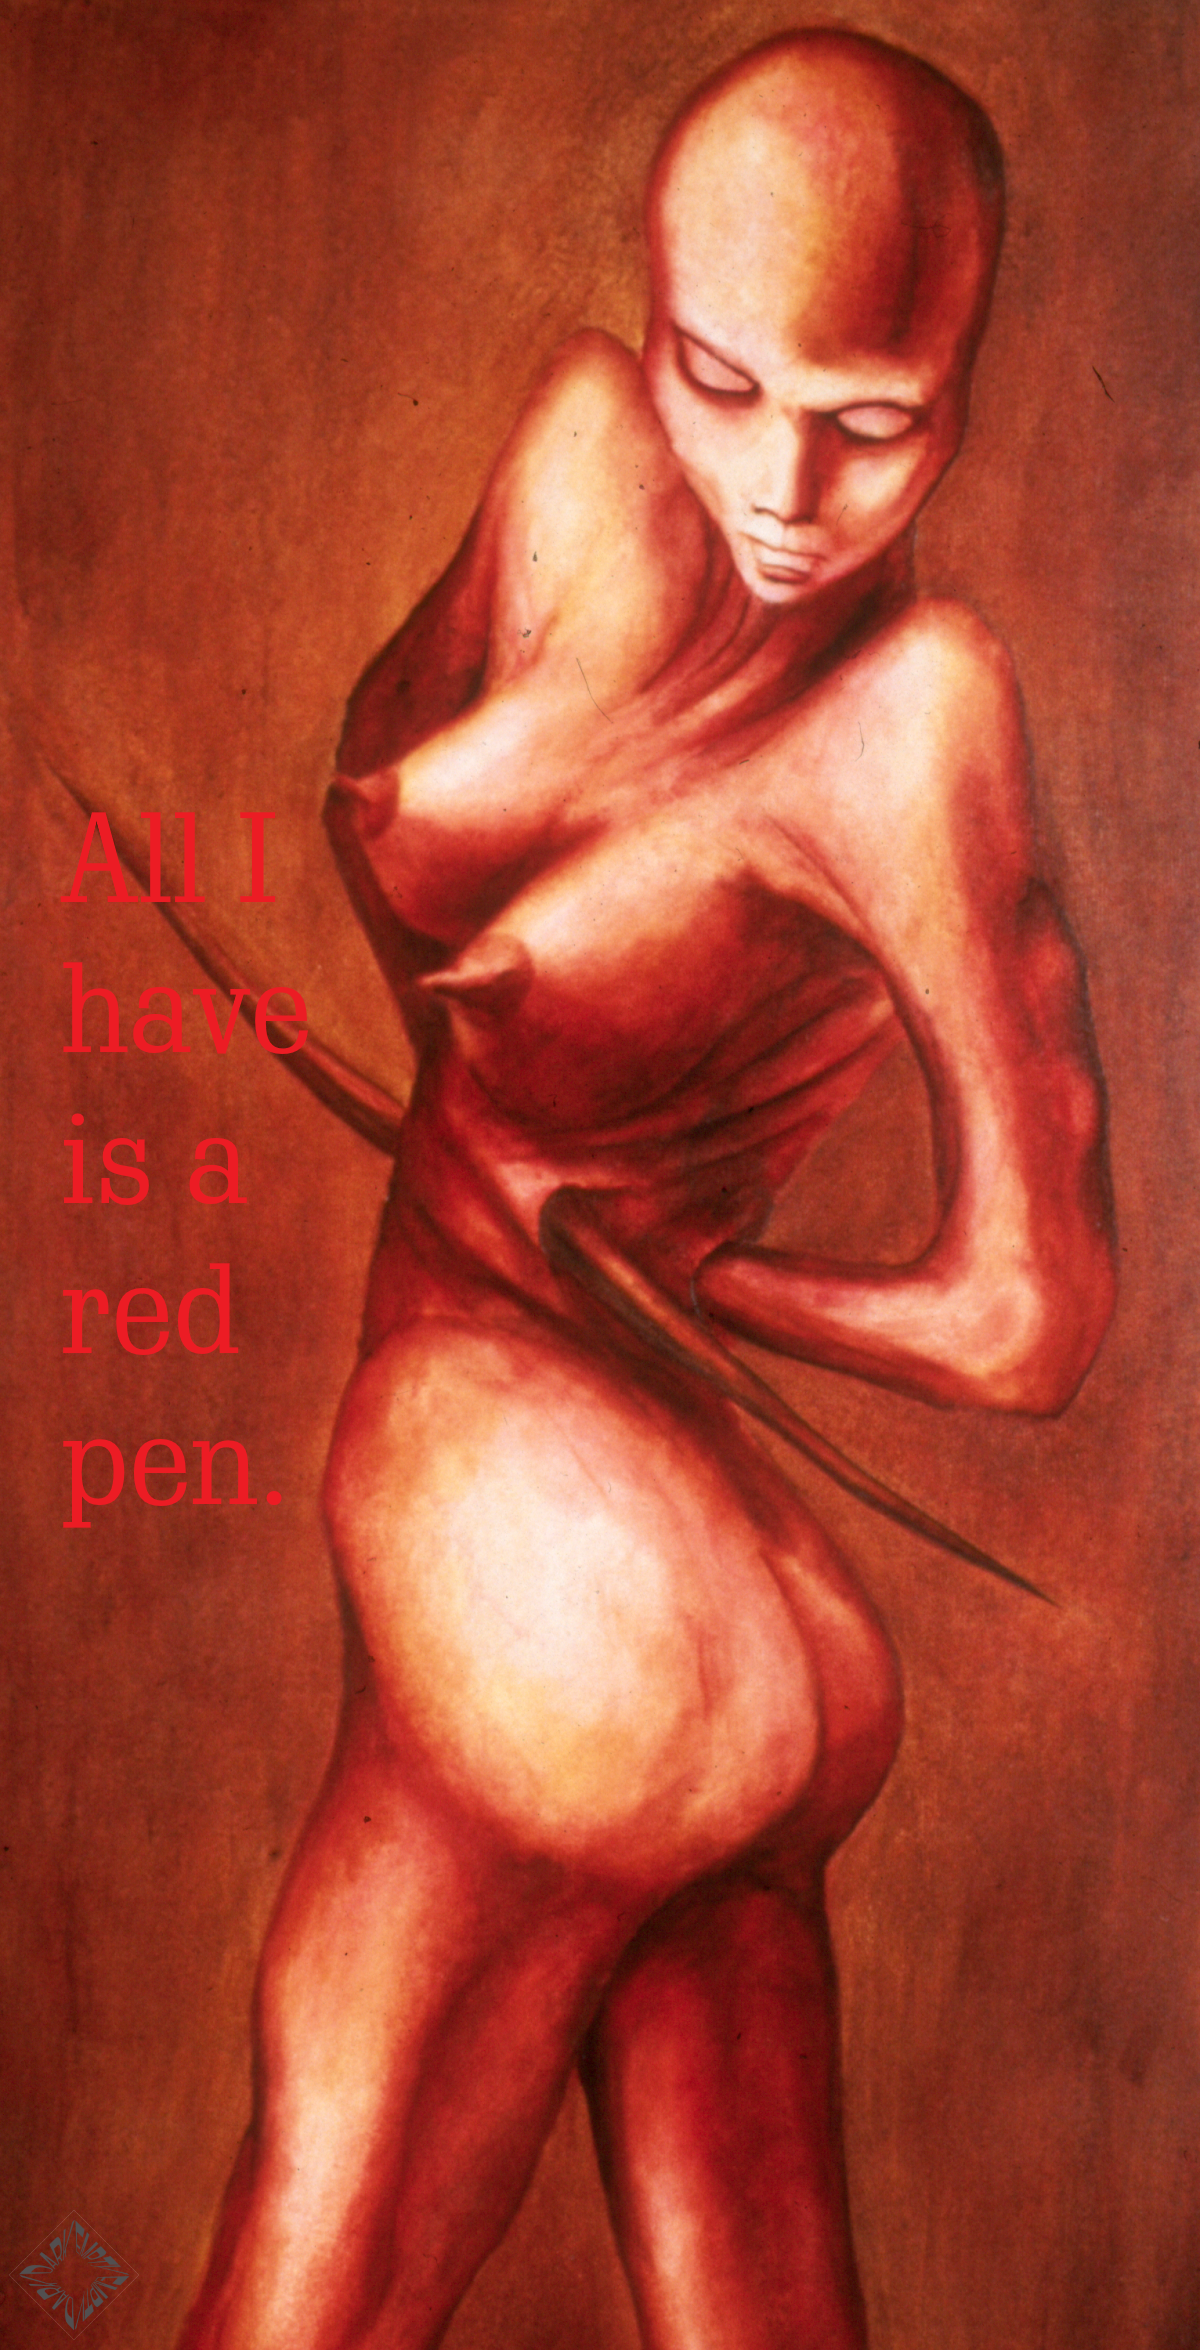 Red Pen